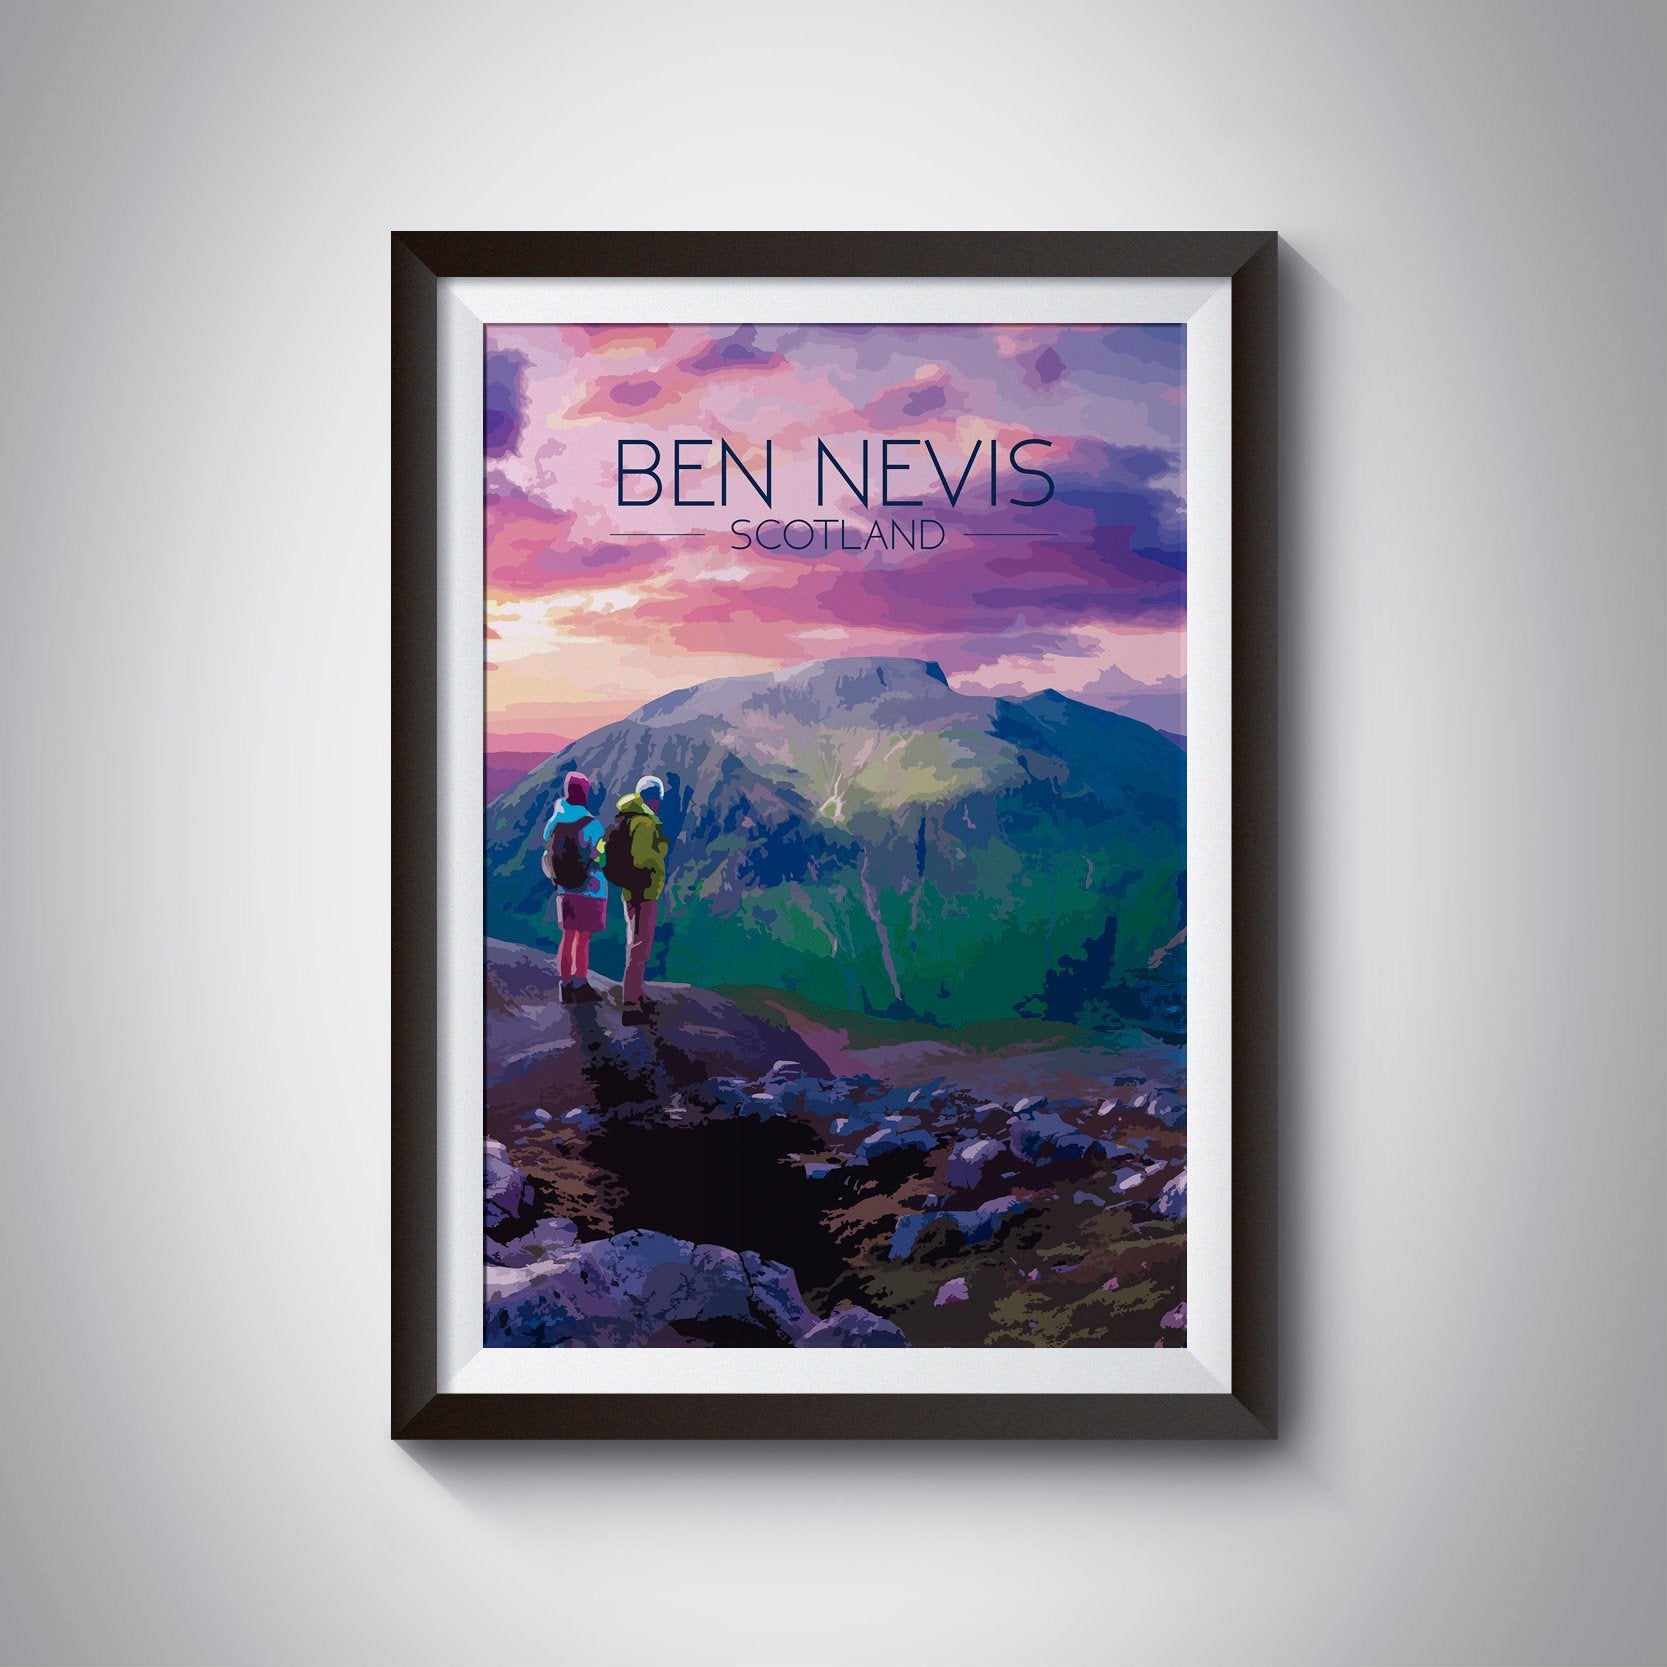 Ben Nevis, Scotland Travel Poster Night